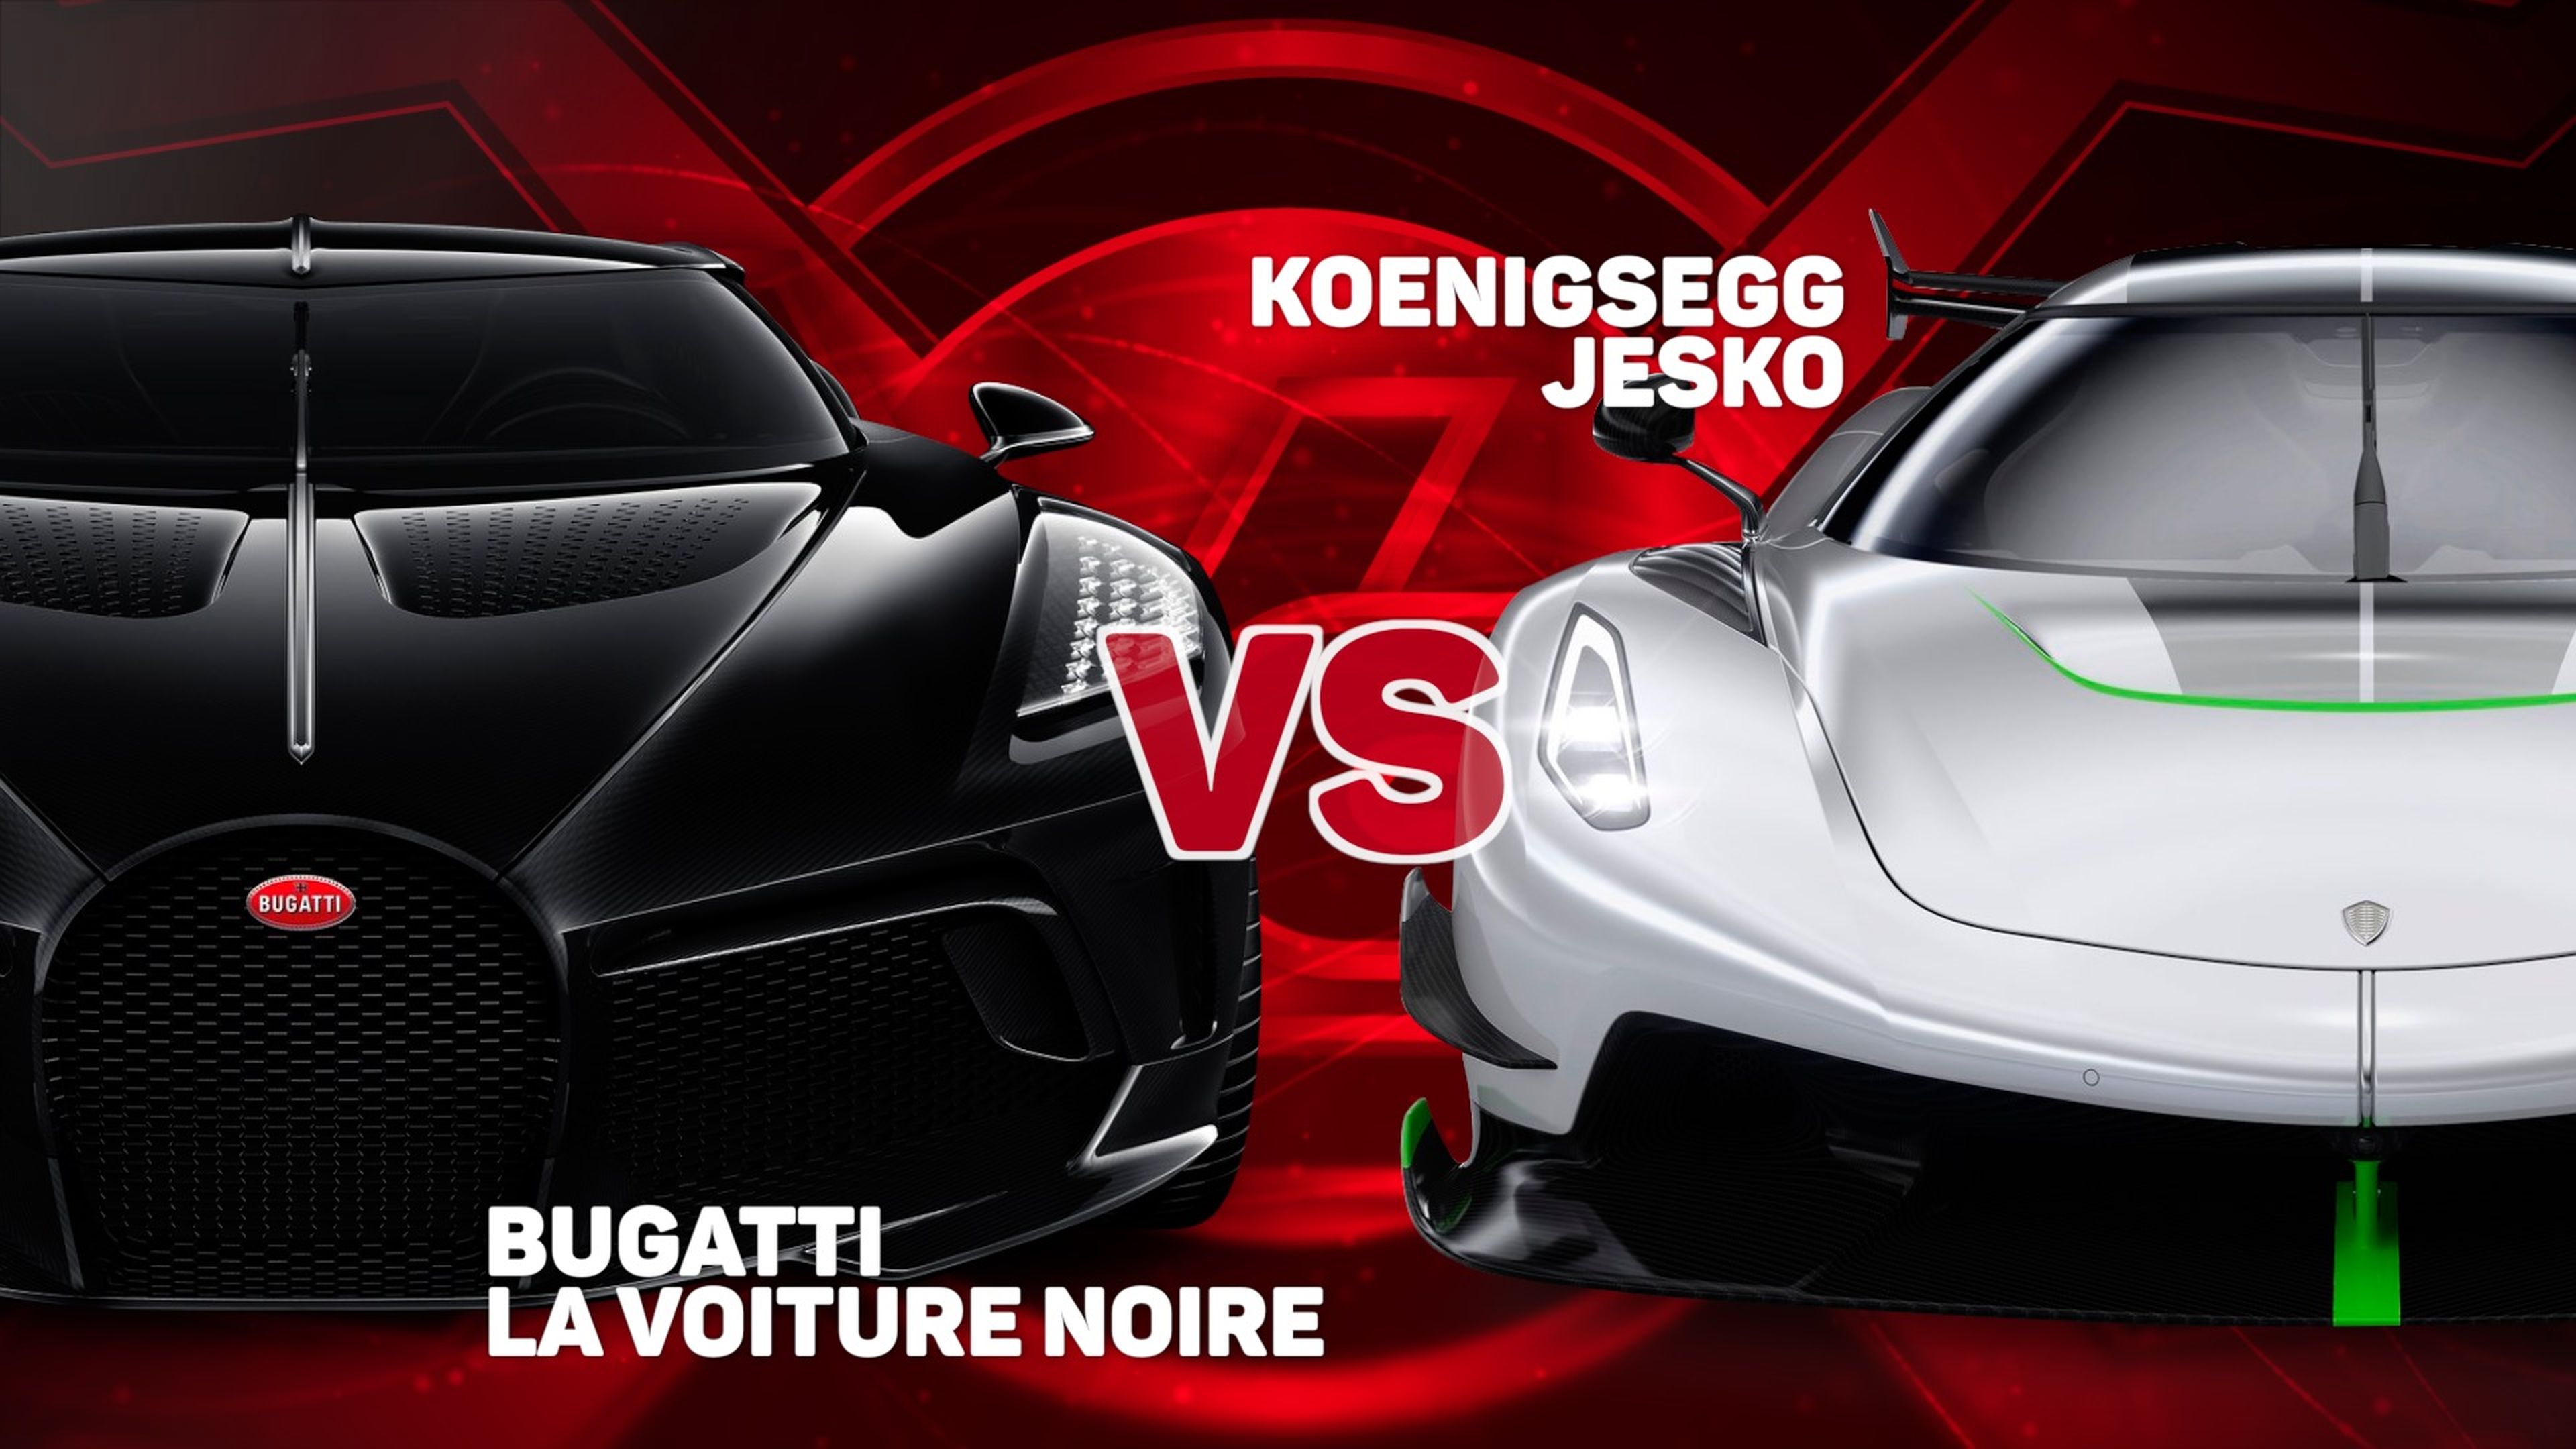 VÍDEO: Cara a cara, Bugatti La Voiture Noire vs Koenigsegg Jesko, ¿cuál es más bestia?